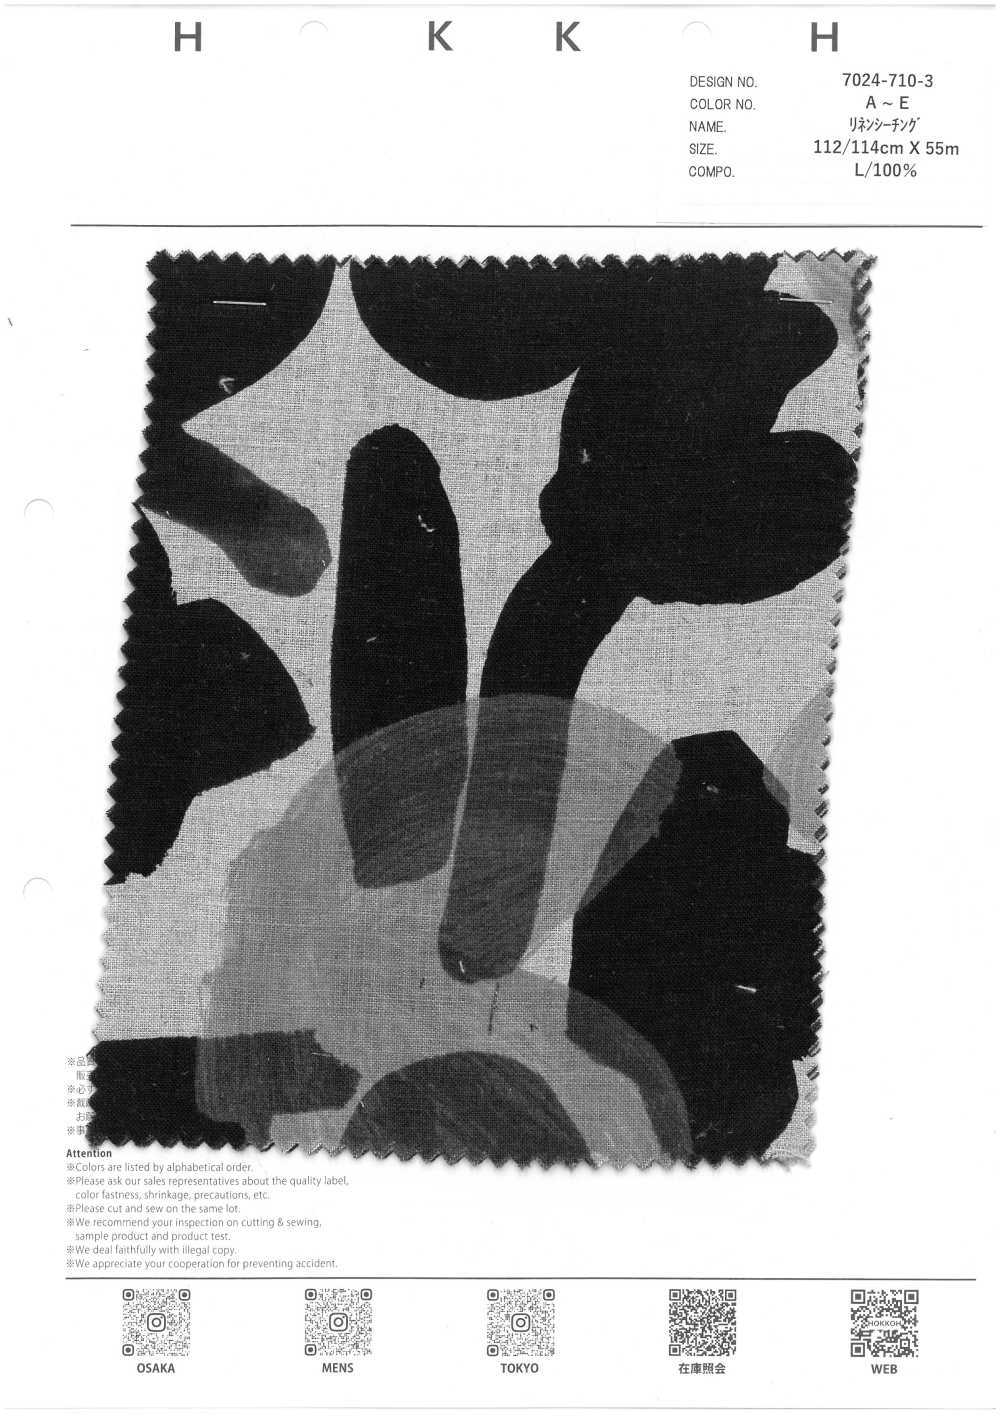 7024-710-3 Leinen-Loomstate-Blumenmuster[Textilgewebe] HOKKOH